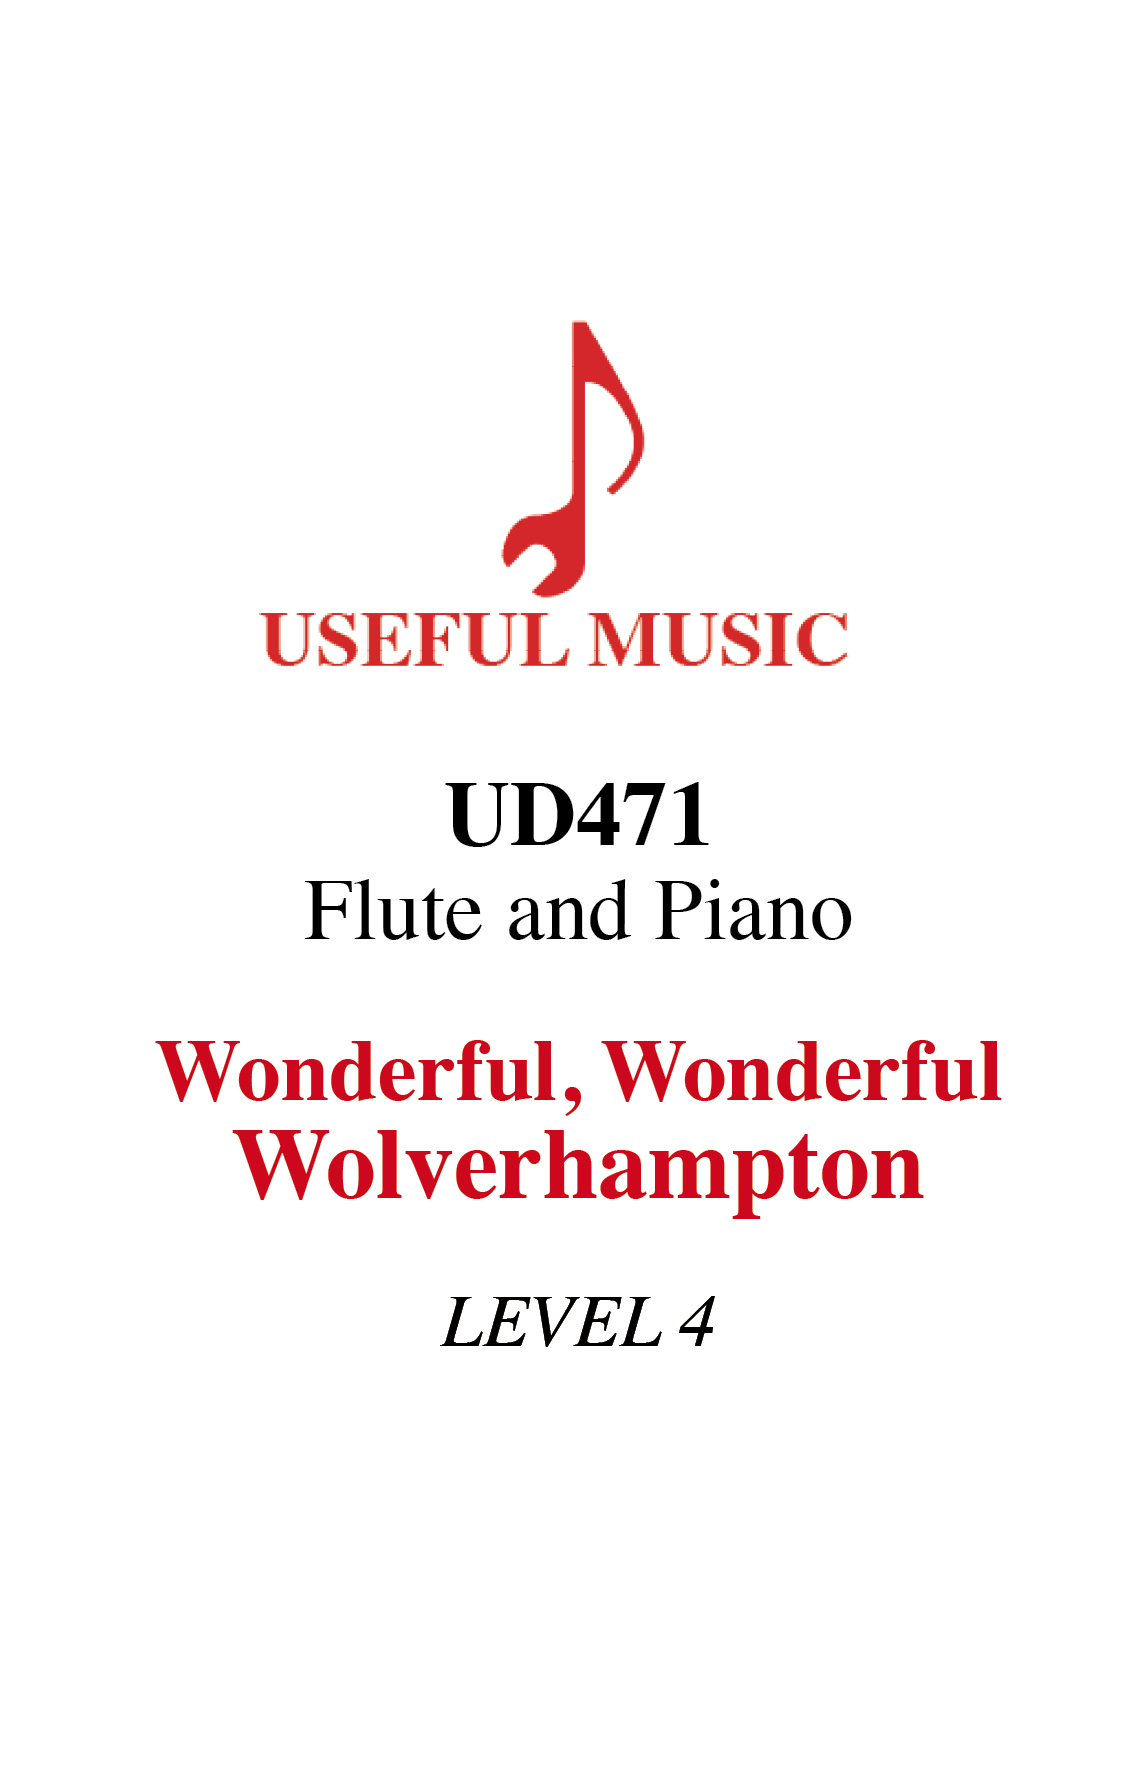 Wonderful, Wonderful Wolverhampton - flute with piano accompaniment